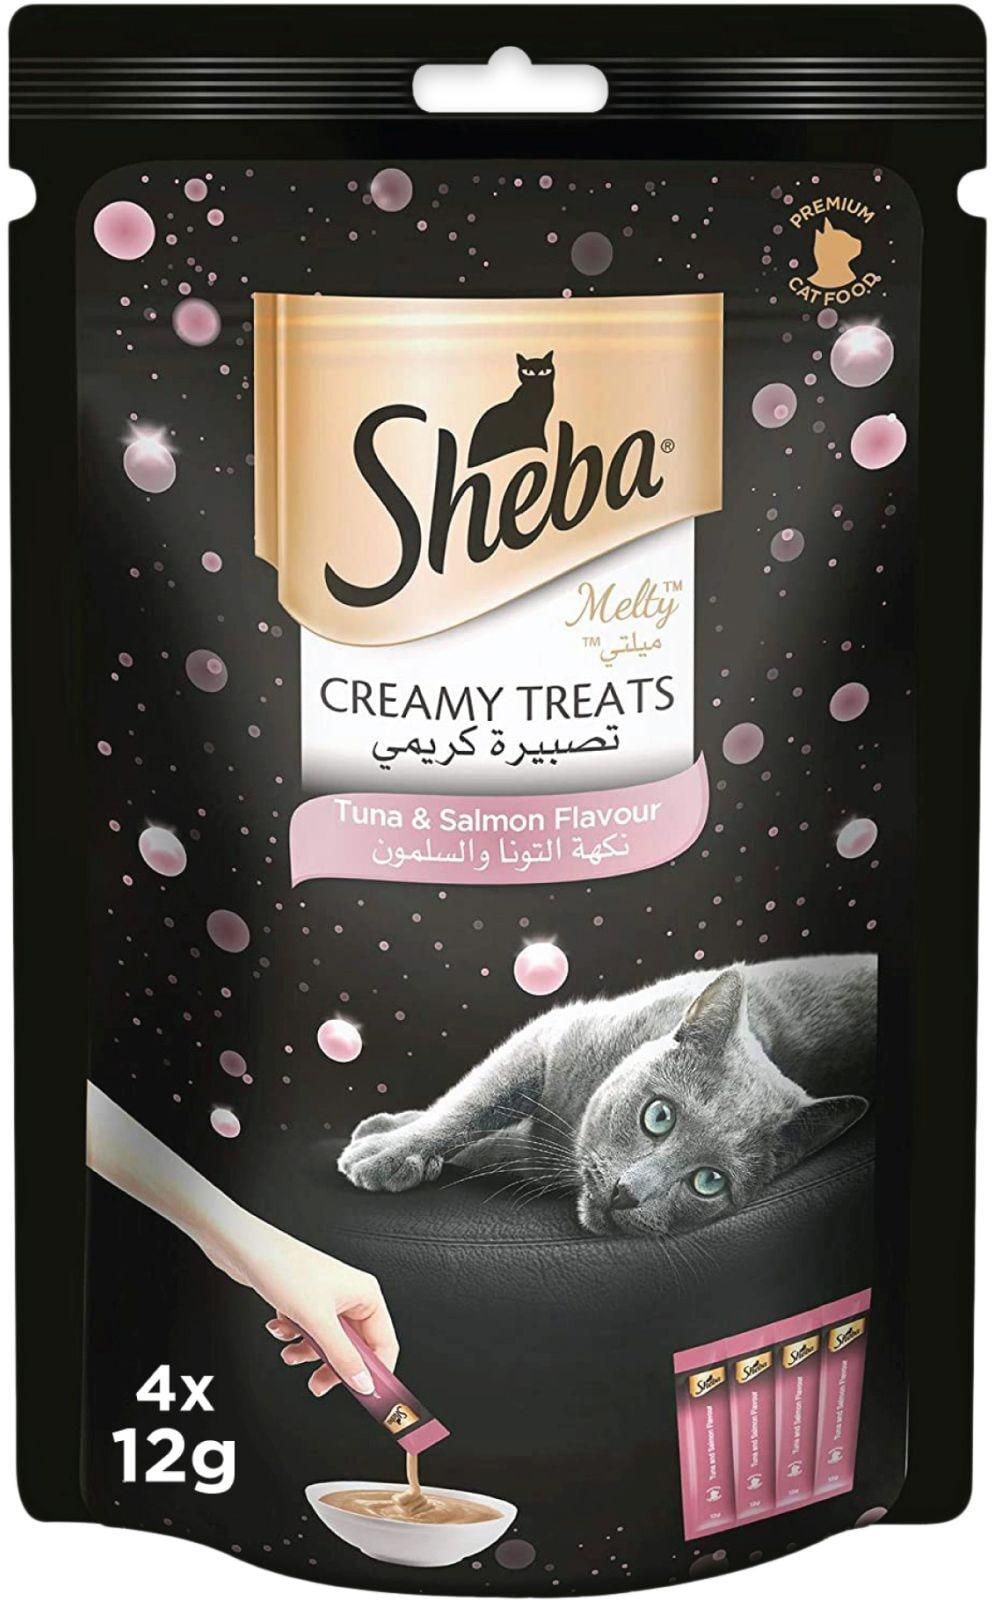 Sheba Melty Tuna And Salmon Flavour Creamy Treats 48g